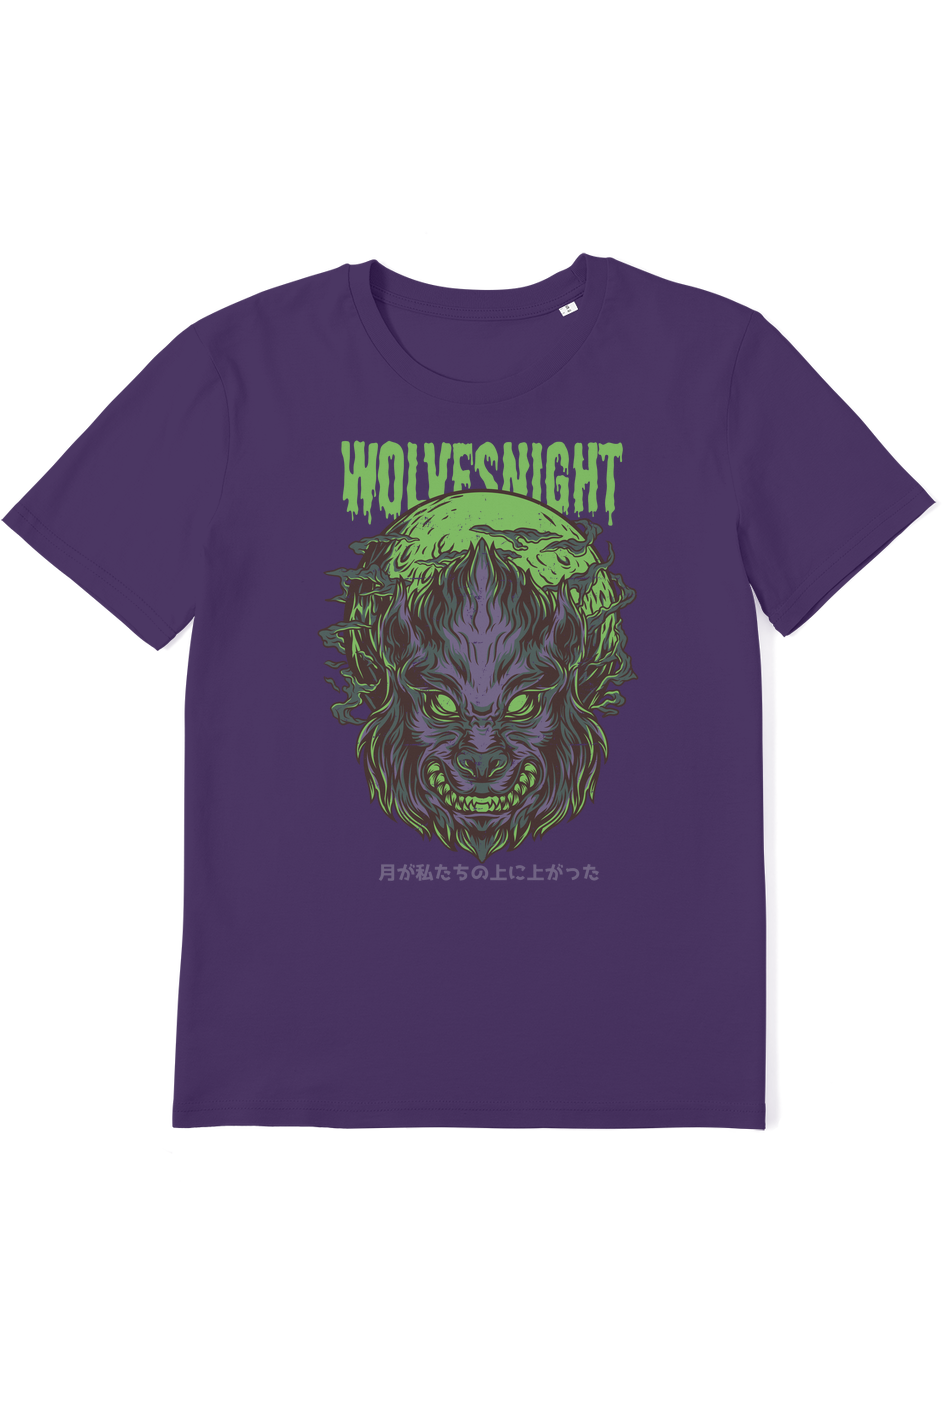 Wolves Night Organic T-Shirt vegan, sustainable, organic streetwear, - TRVTH ORGANIC CLOTHING